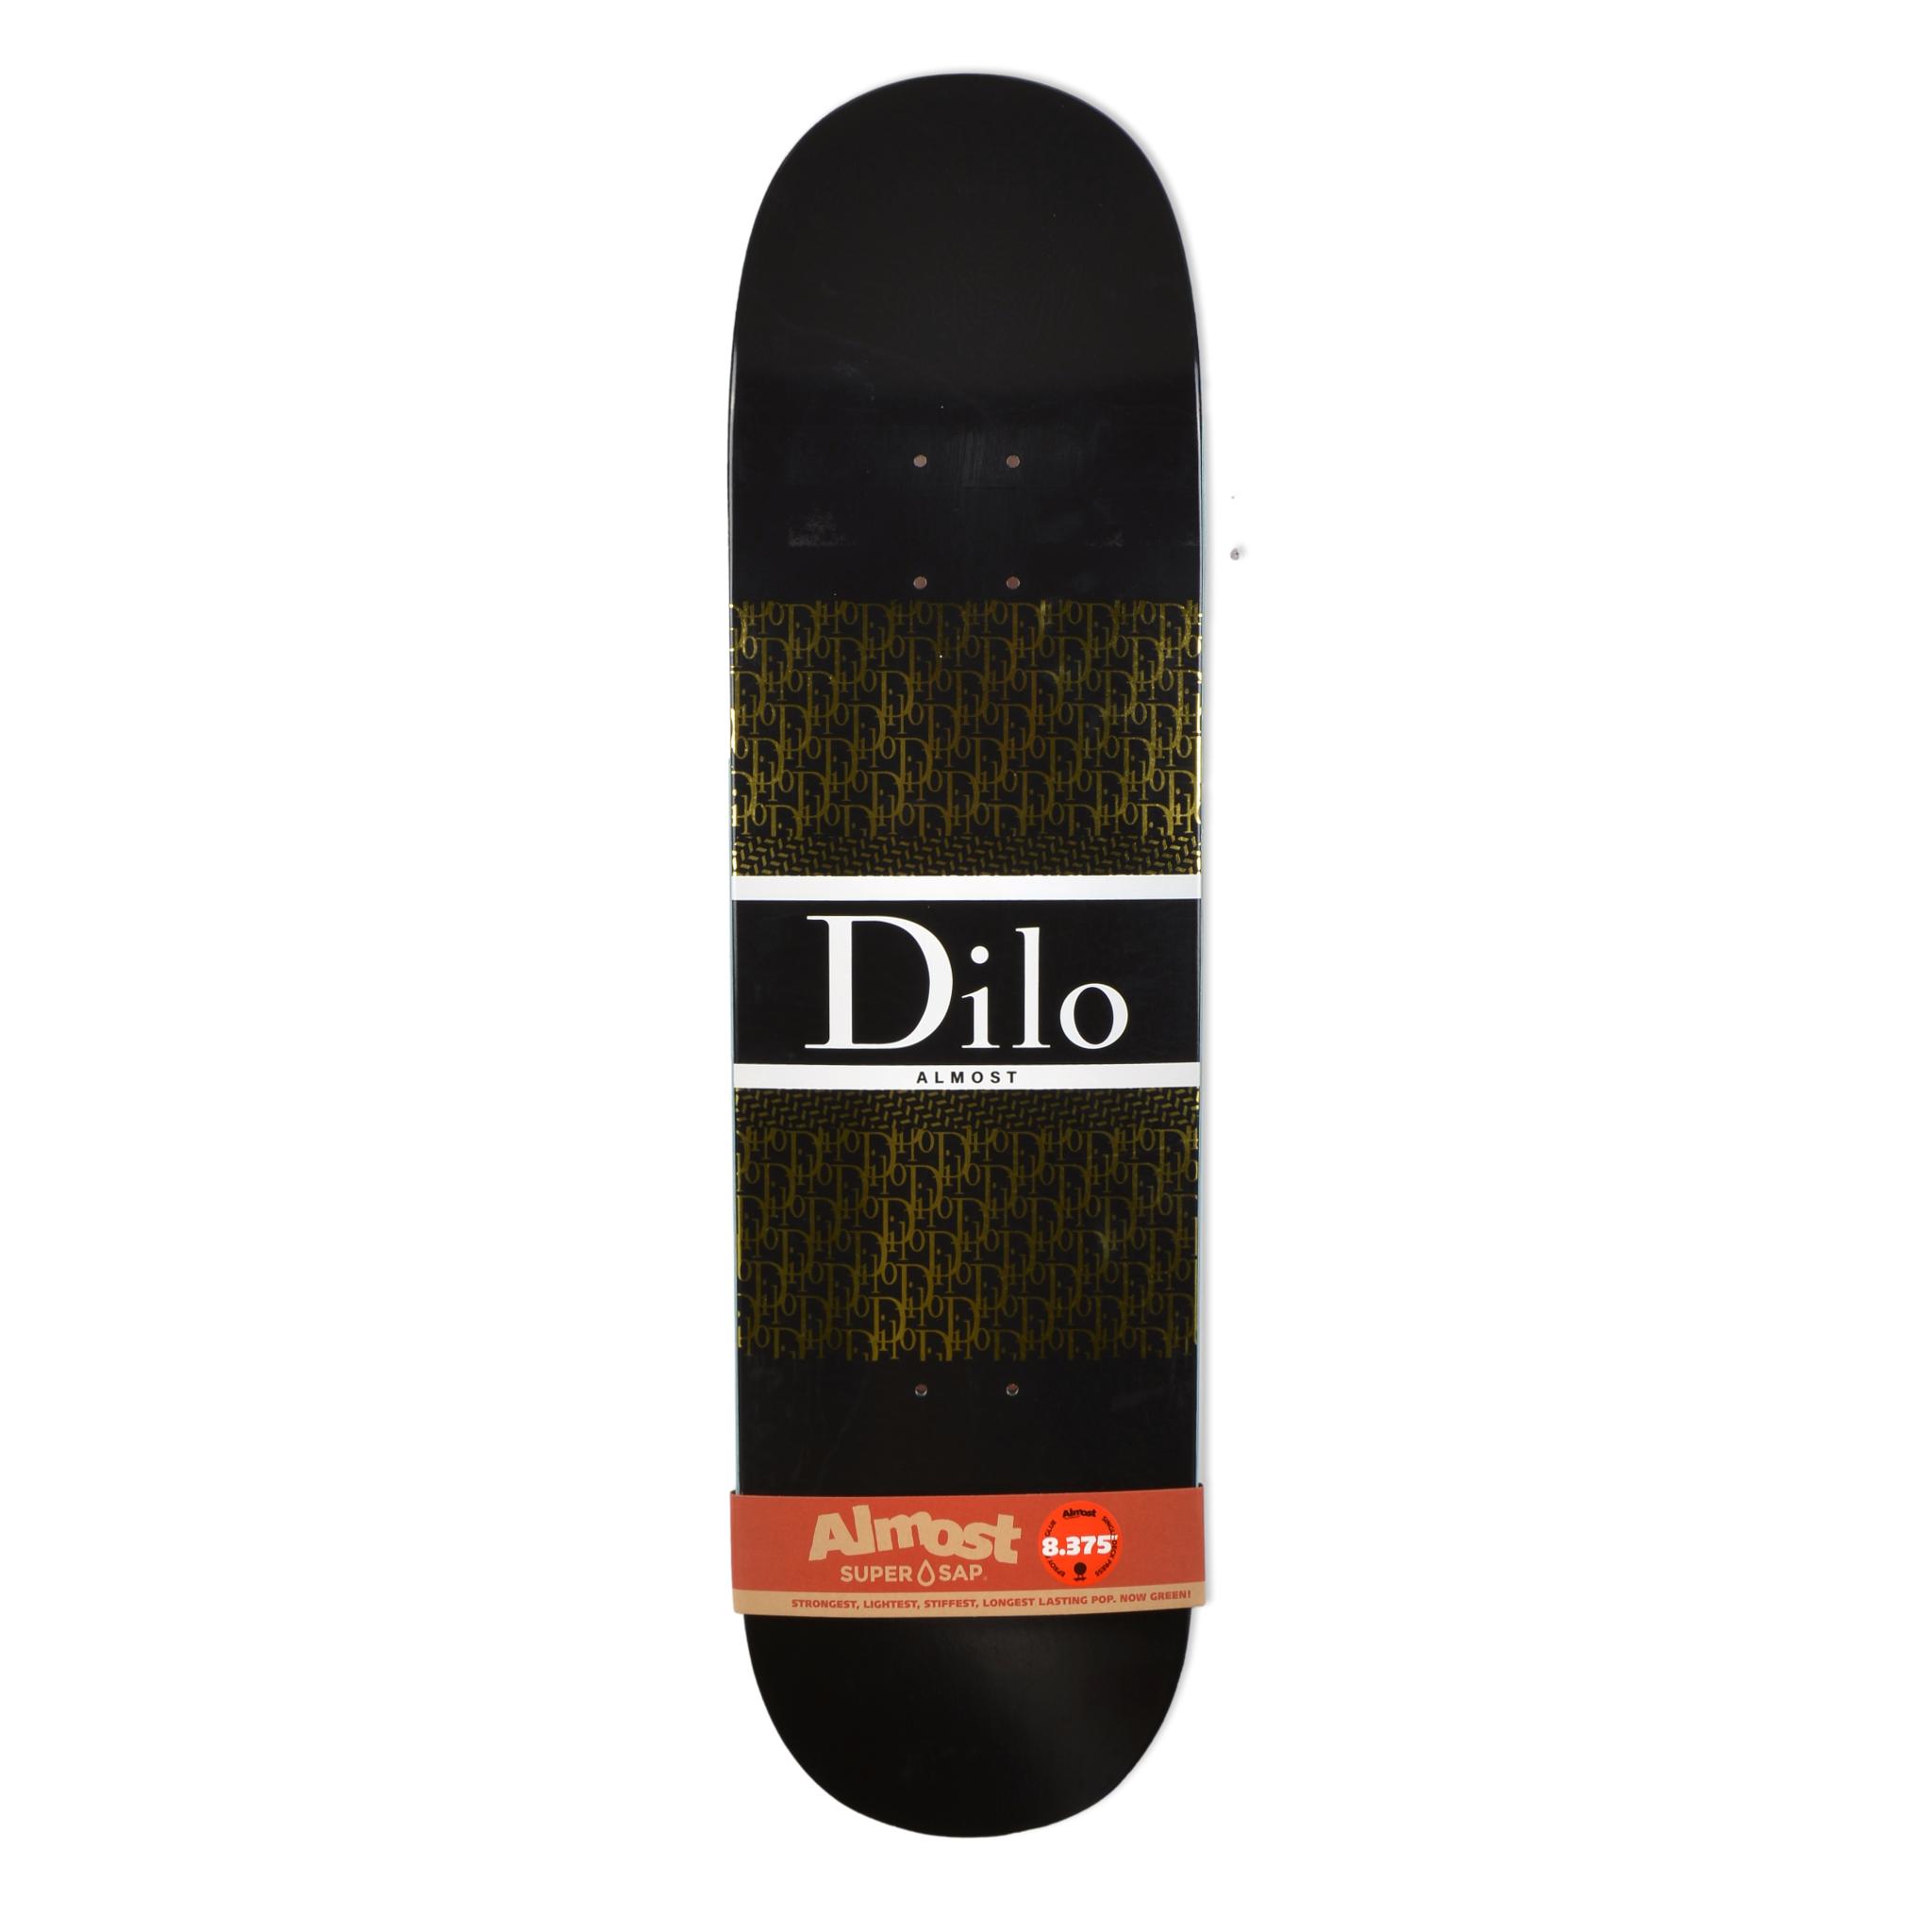 Almost Dilo Luxury Super Sap Deck 8.375